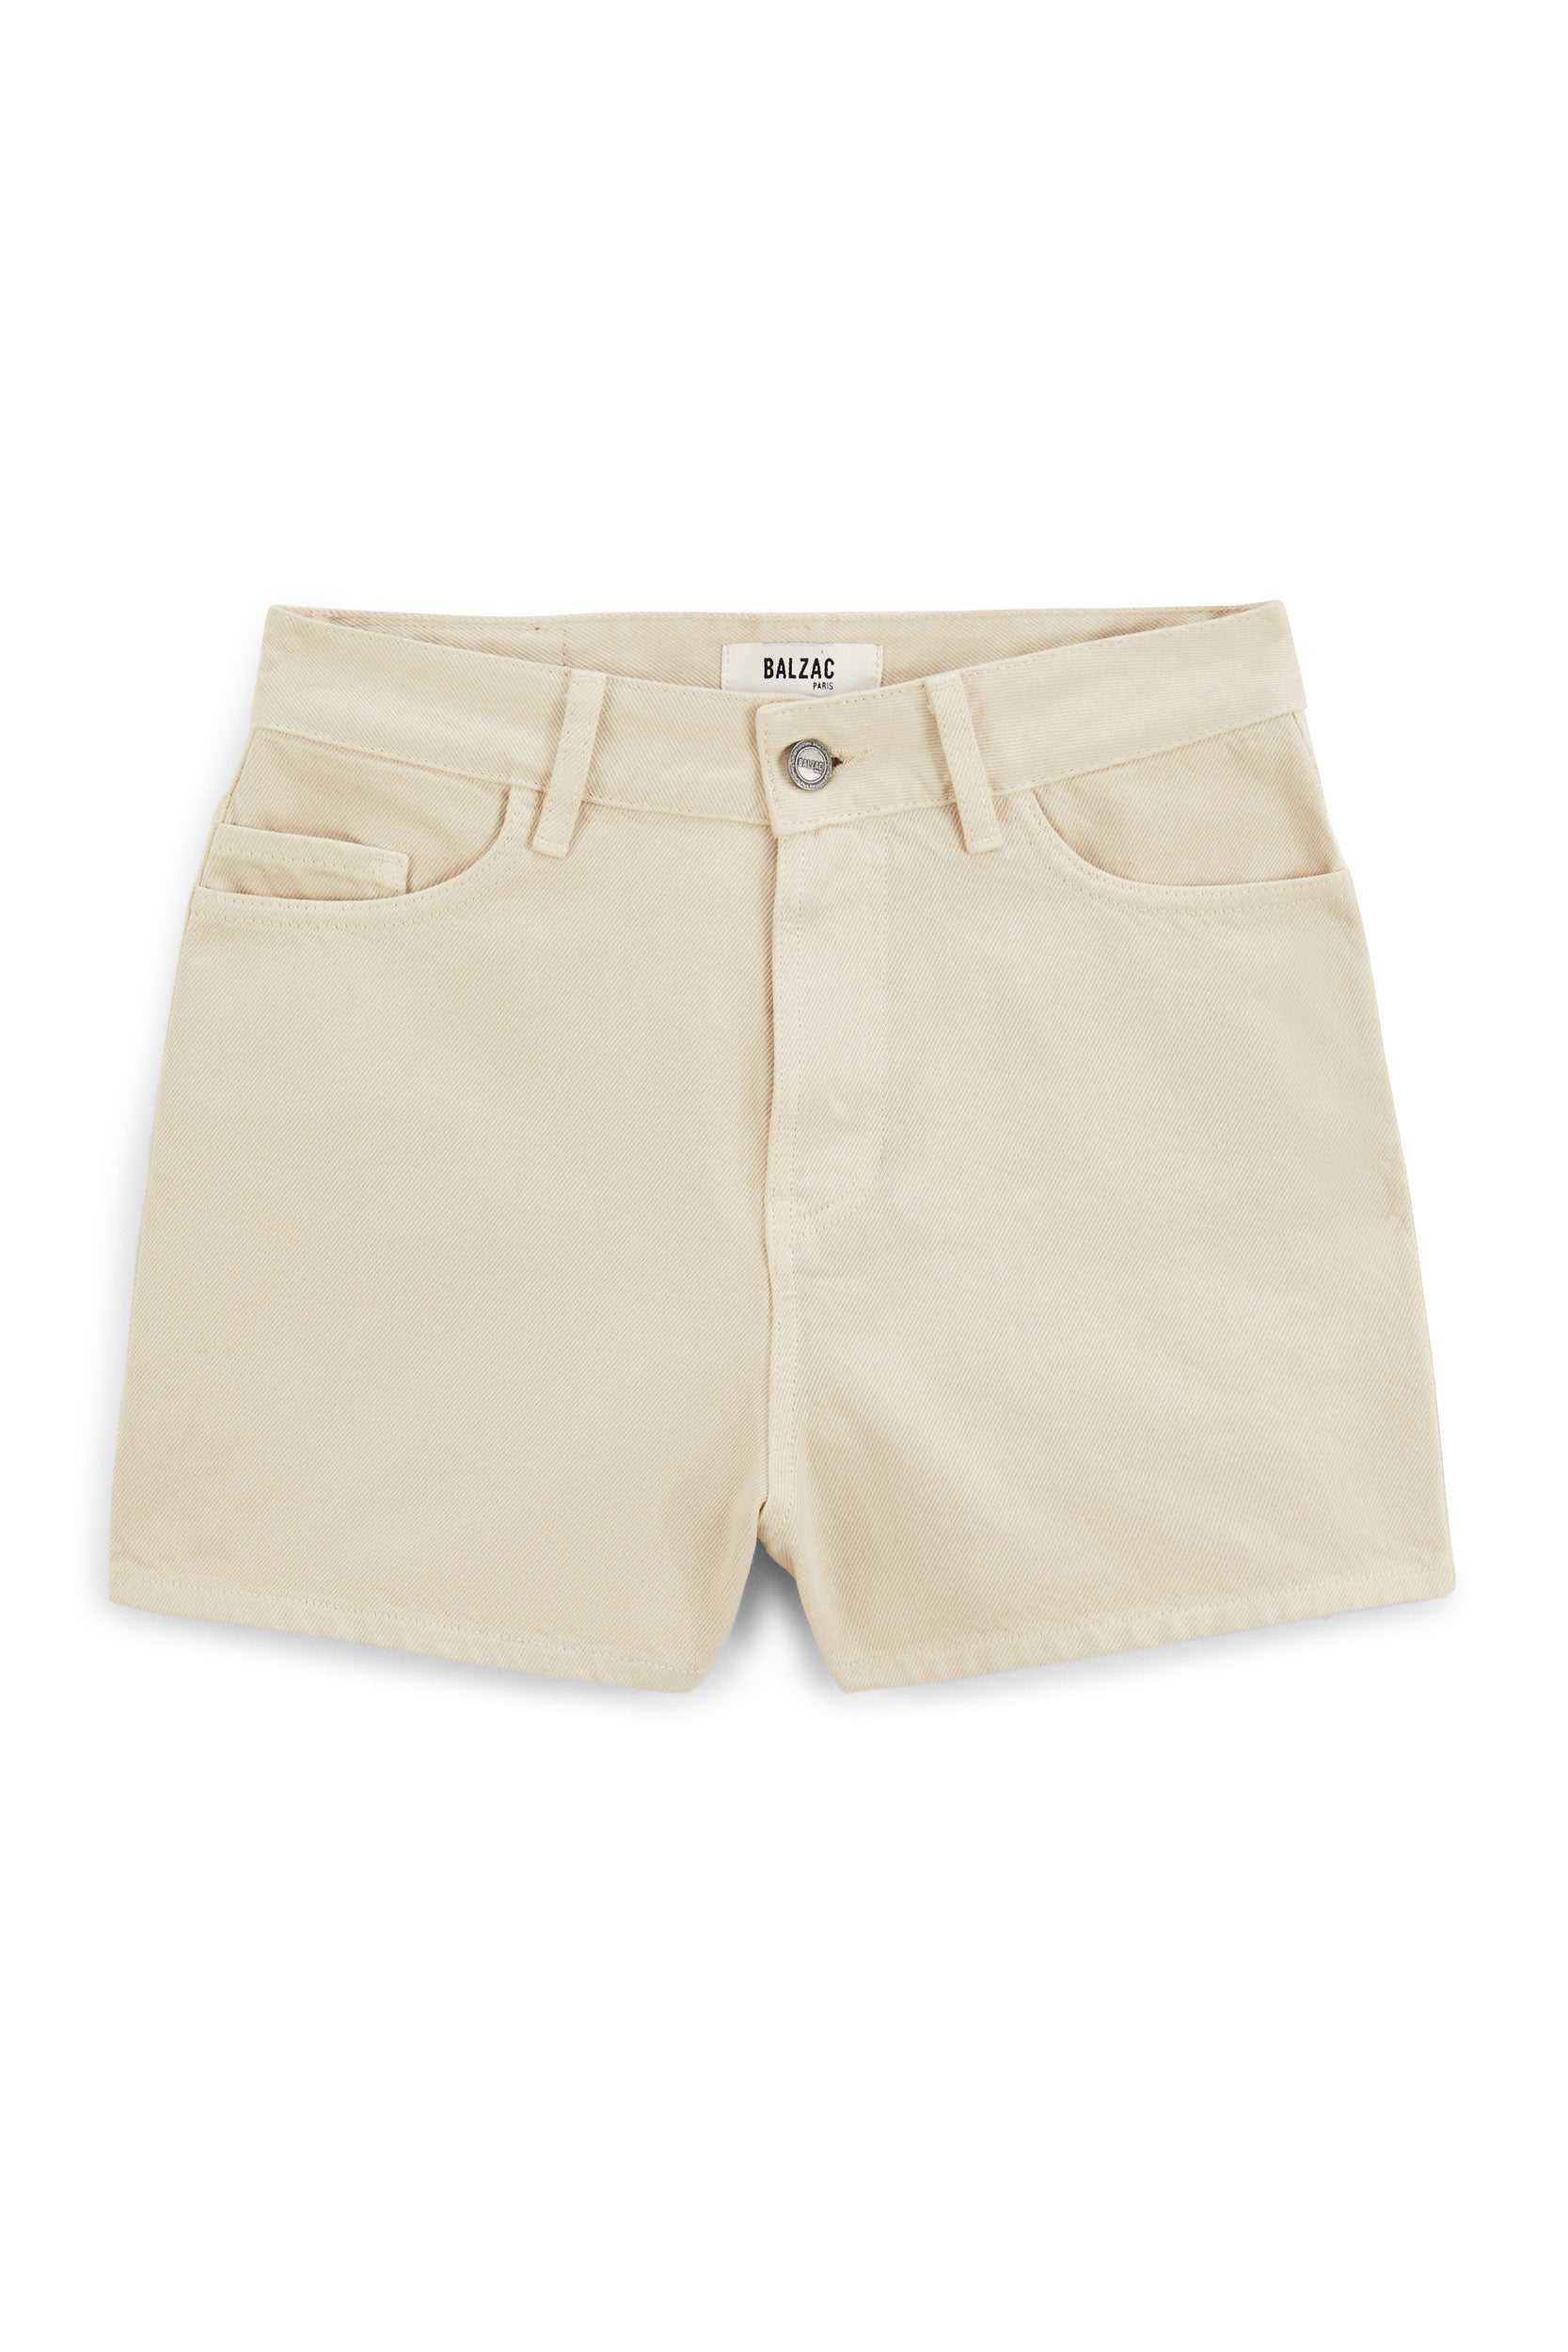 Triomphe pampas beige shorts